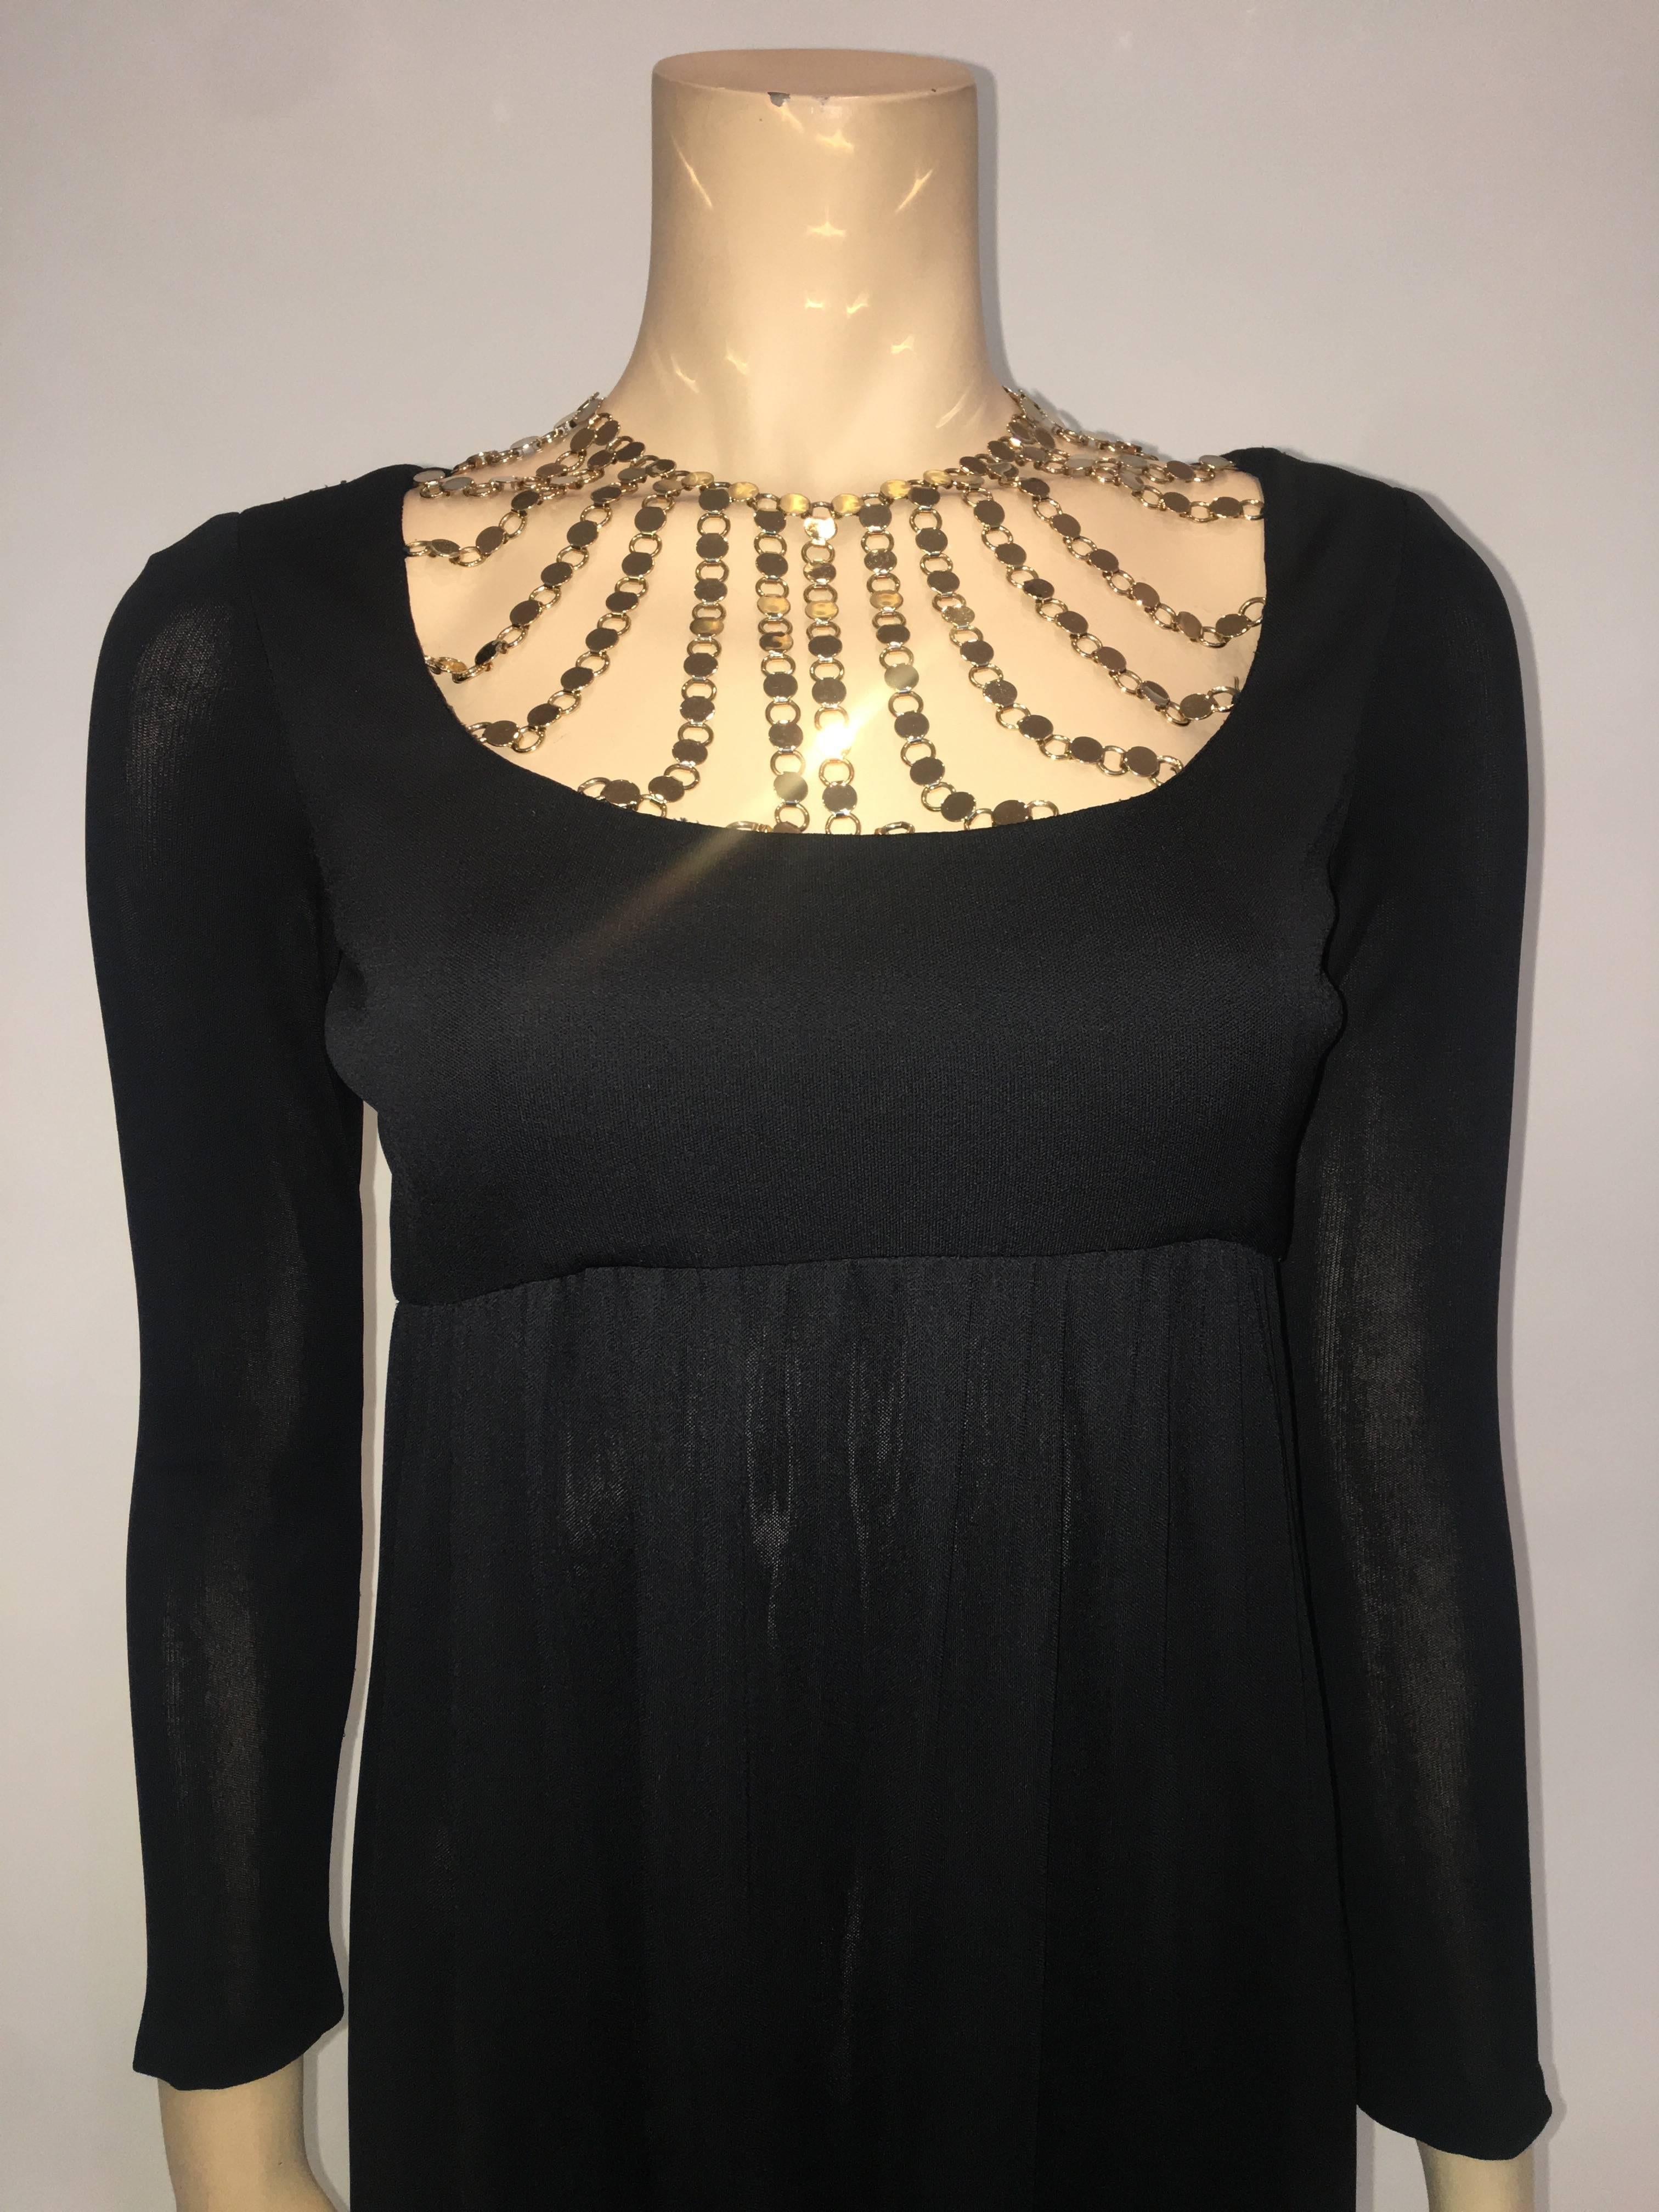 Jay Korbin for Maisonette 1960's Black Matte Jersey Long Dress with Gold Chain Neckline and Empire Waistline

Measurements : *ALL MEASUREMENTS TAKEN FLAT*
Shoulders : 13.5